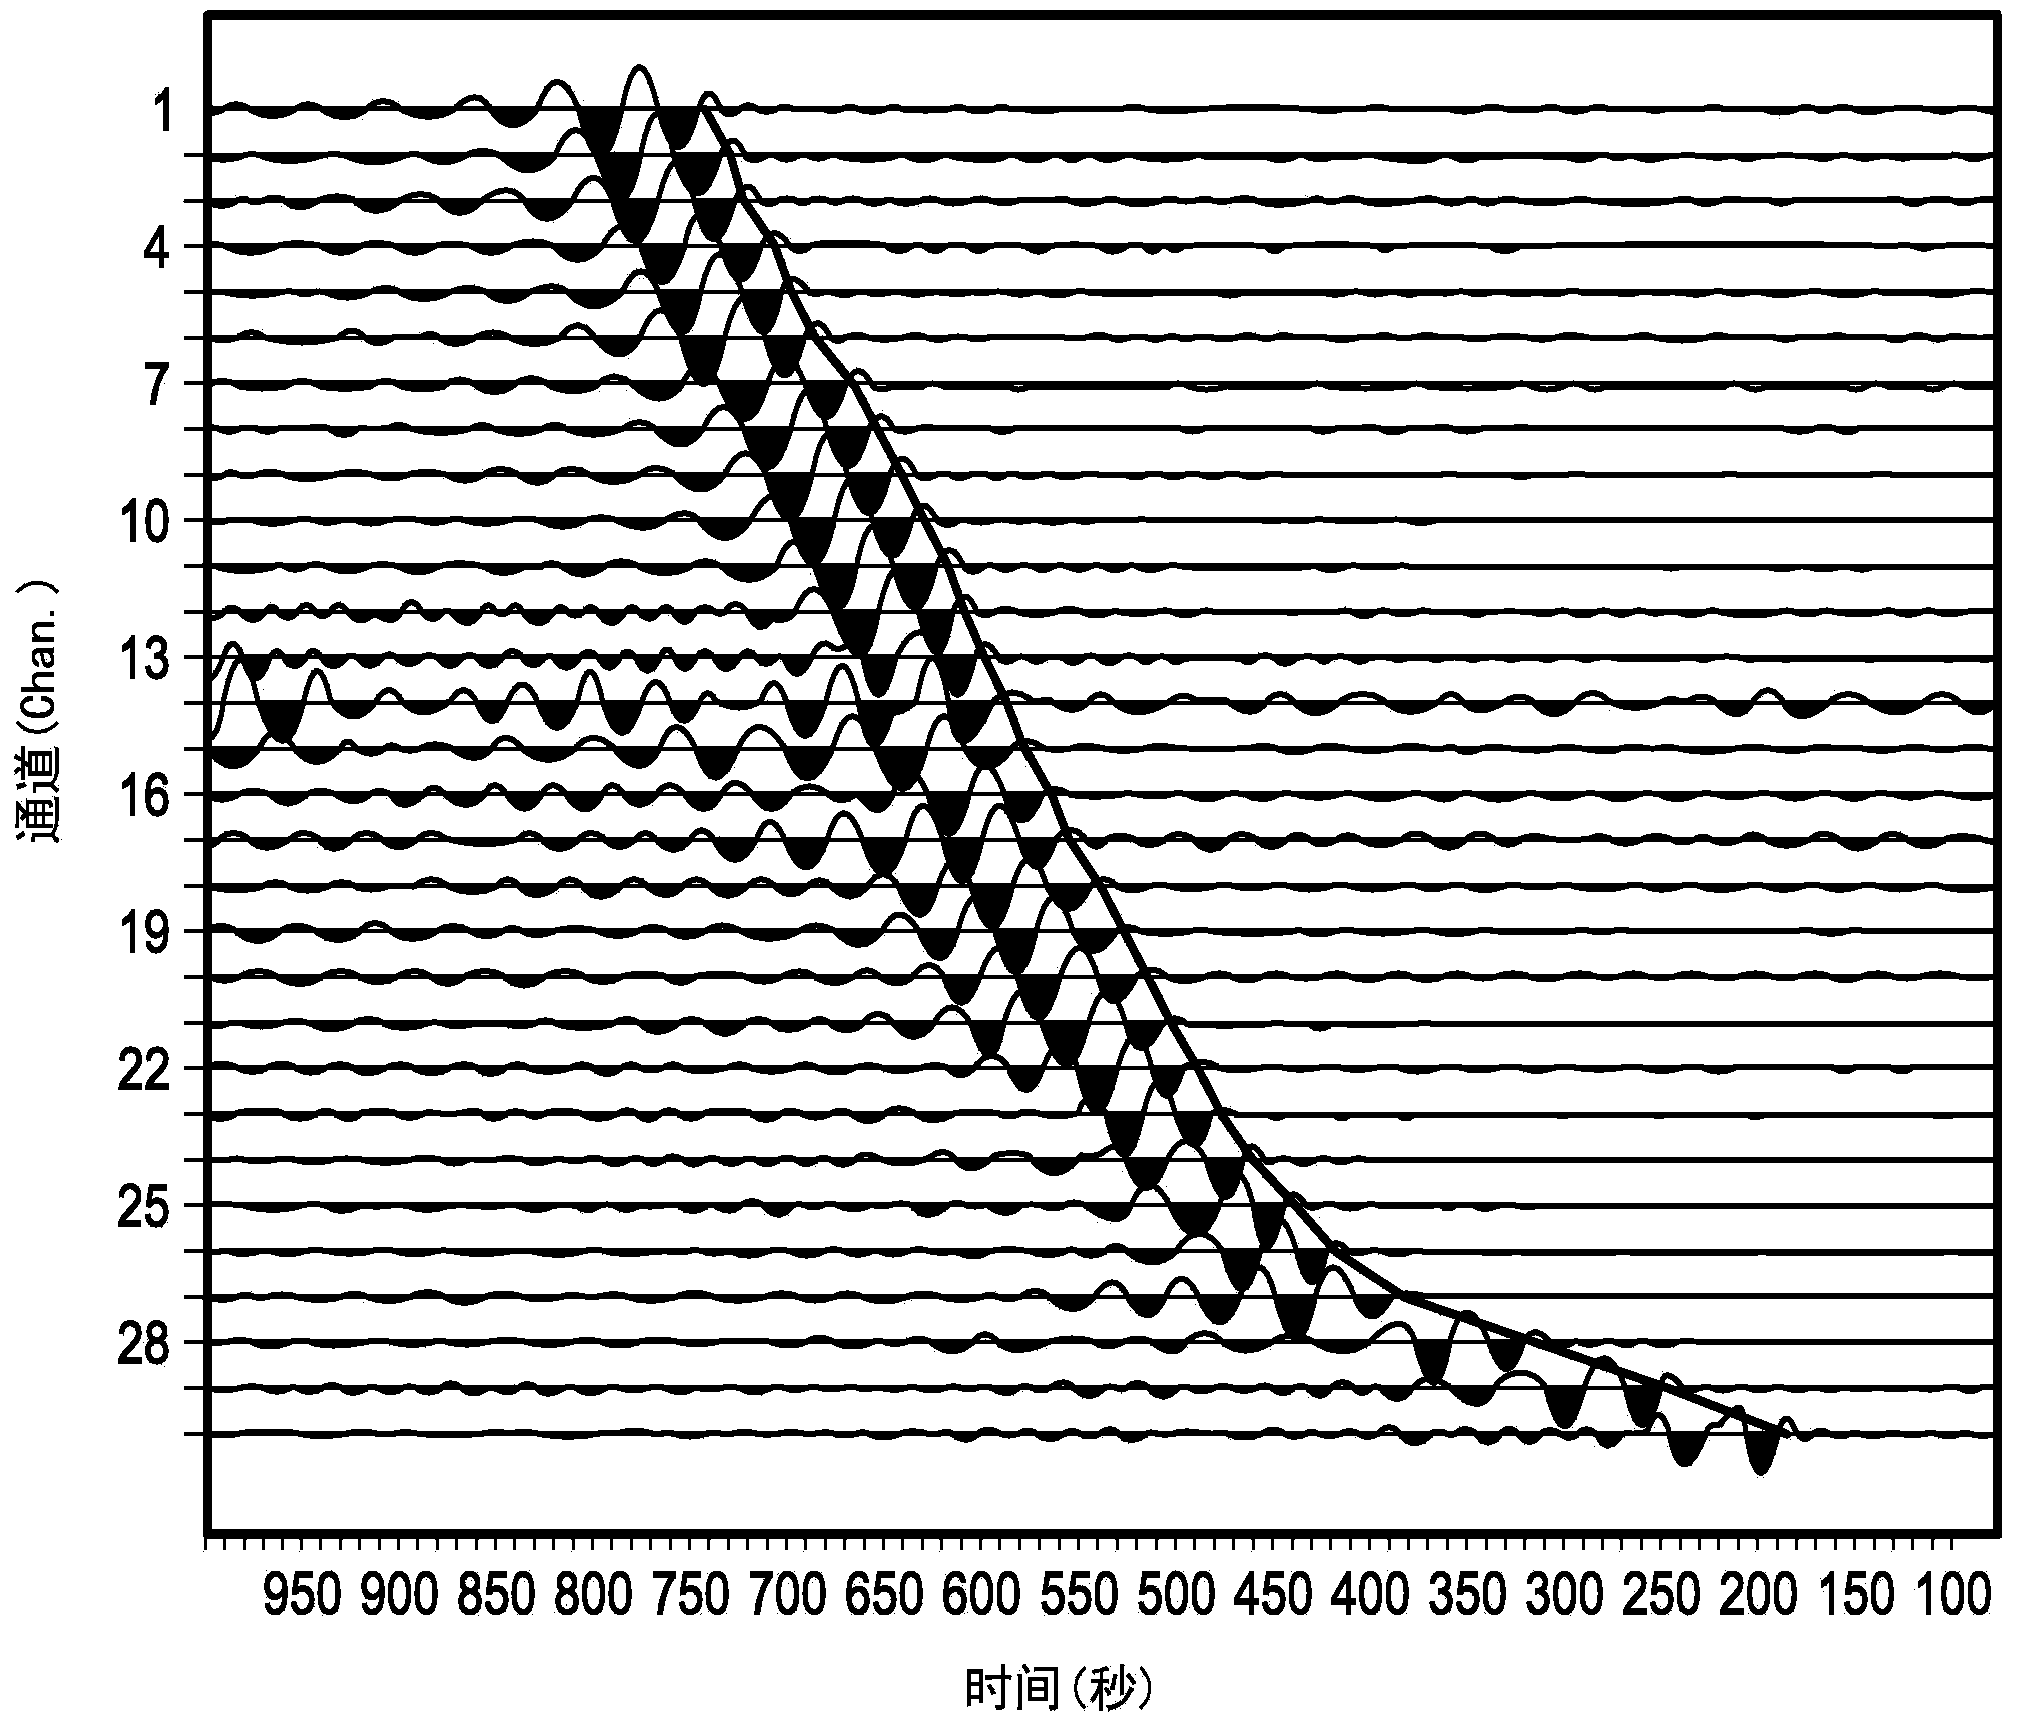 Methods and apparatus having borehole seismic waveform compression